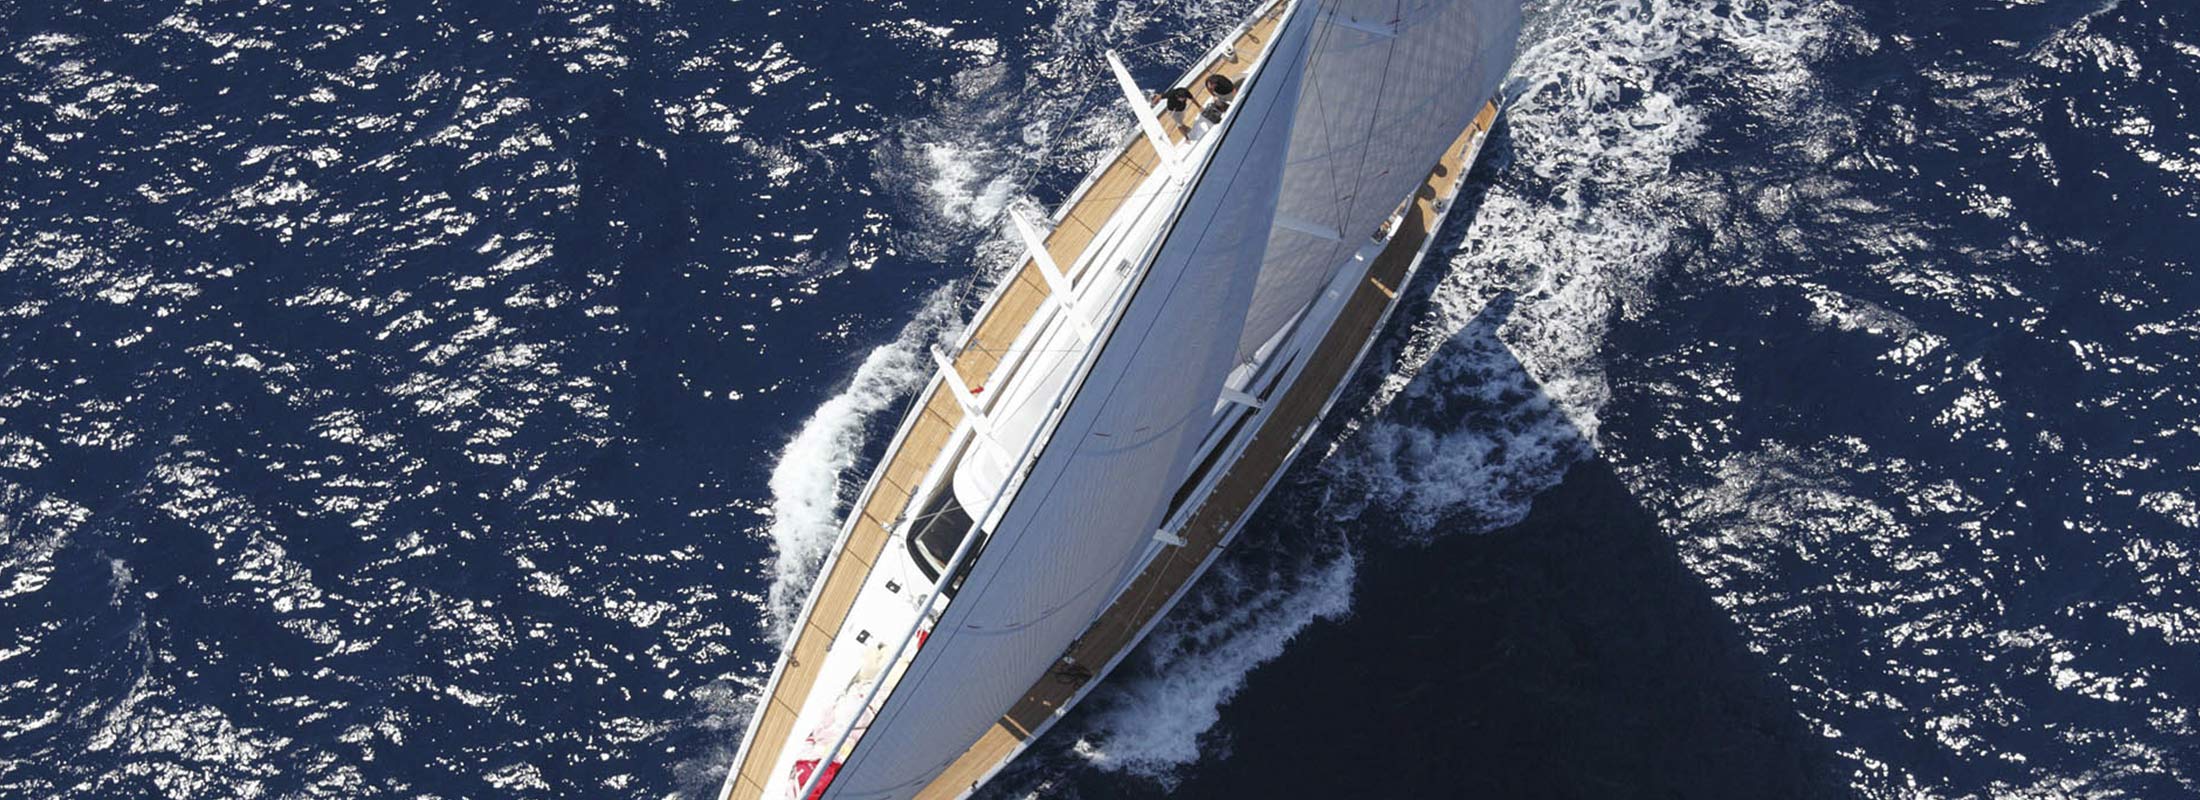 Patea Sailing Yacht for Charter Mediterranean slider 2